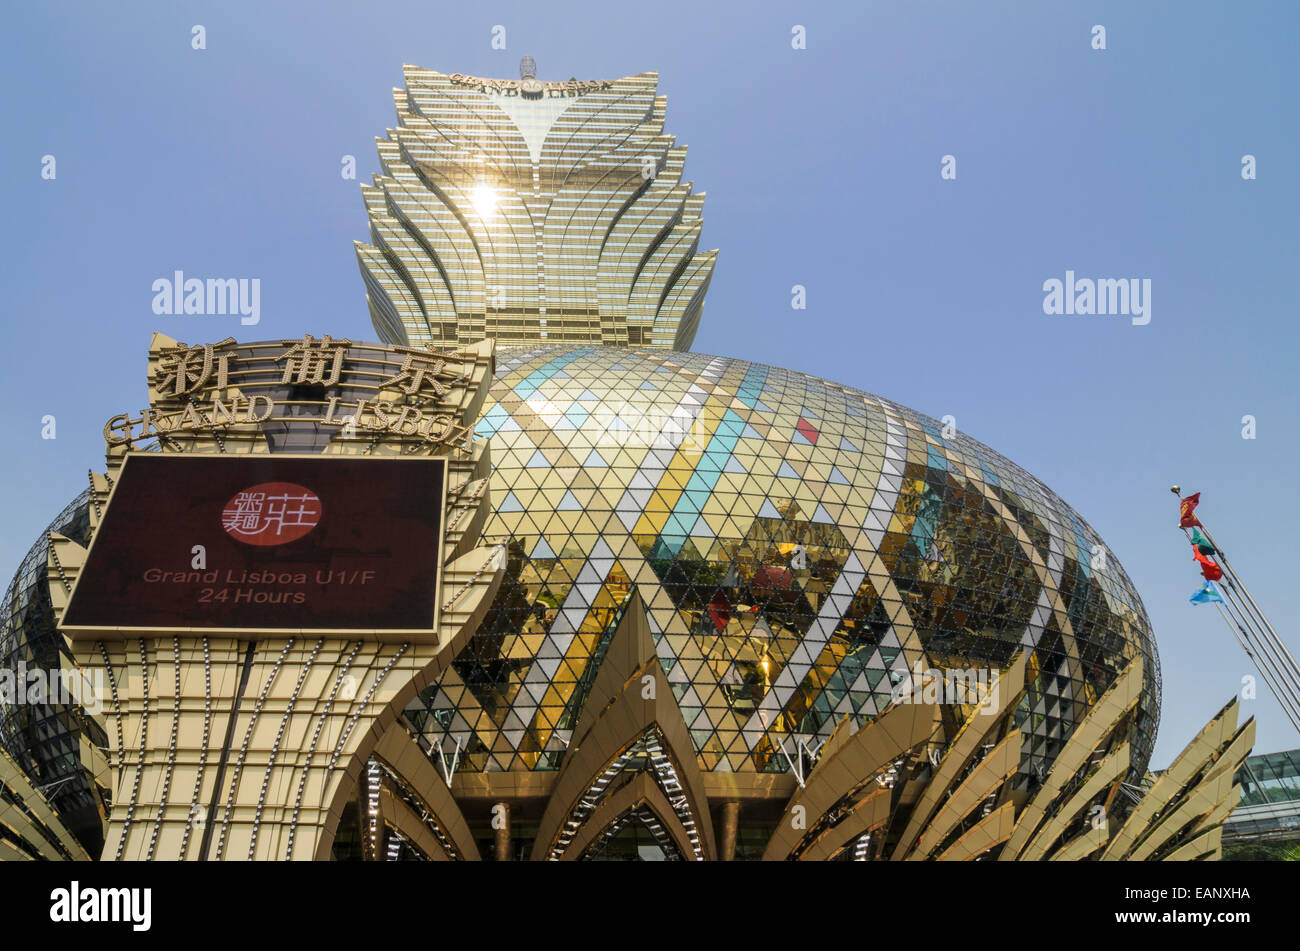 The golden Grand Lisboa Casino Hotel, Macau, China Stock Photo